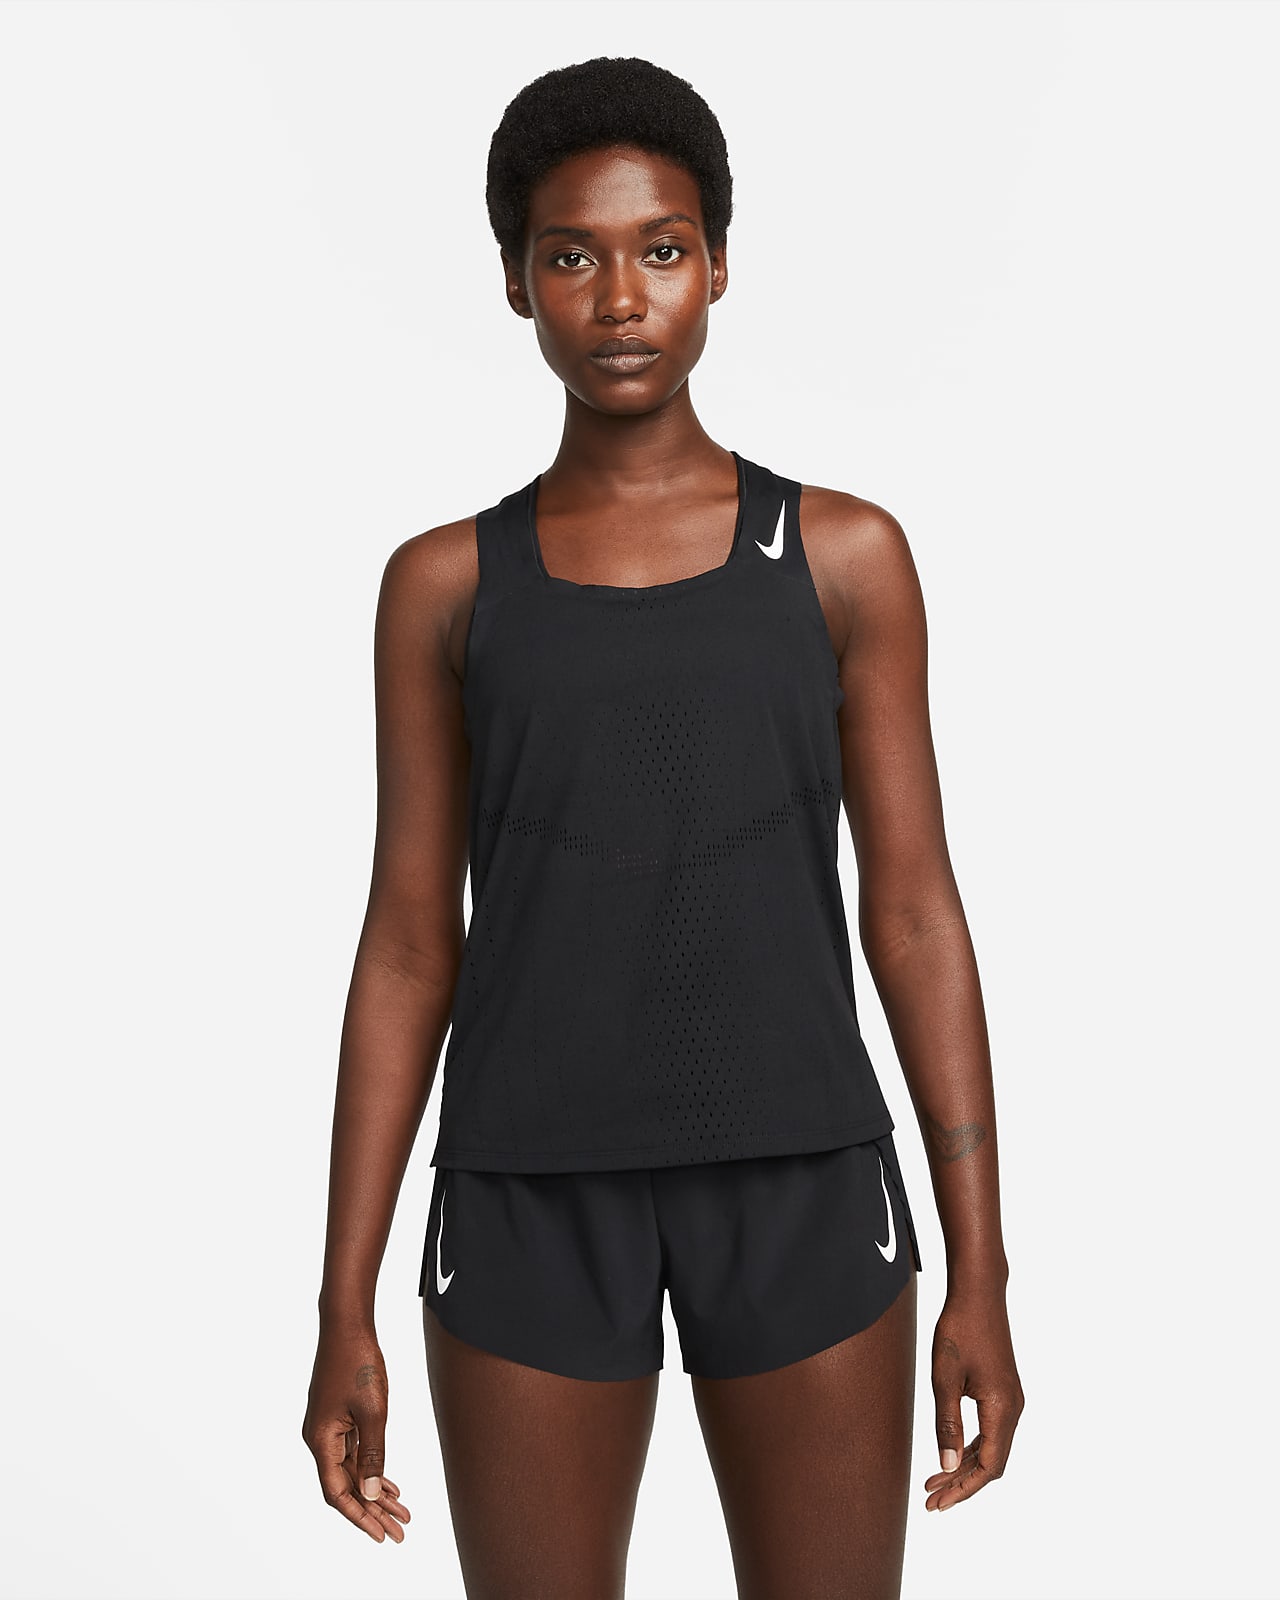 Buy Nike Dri-Fit One All Over Print Tank Top Women Black, Gold